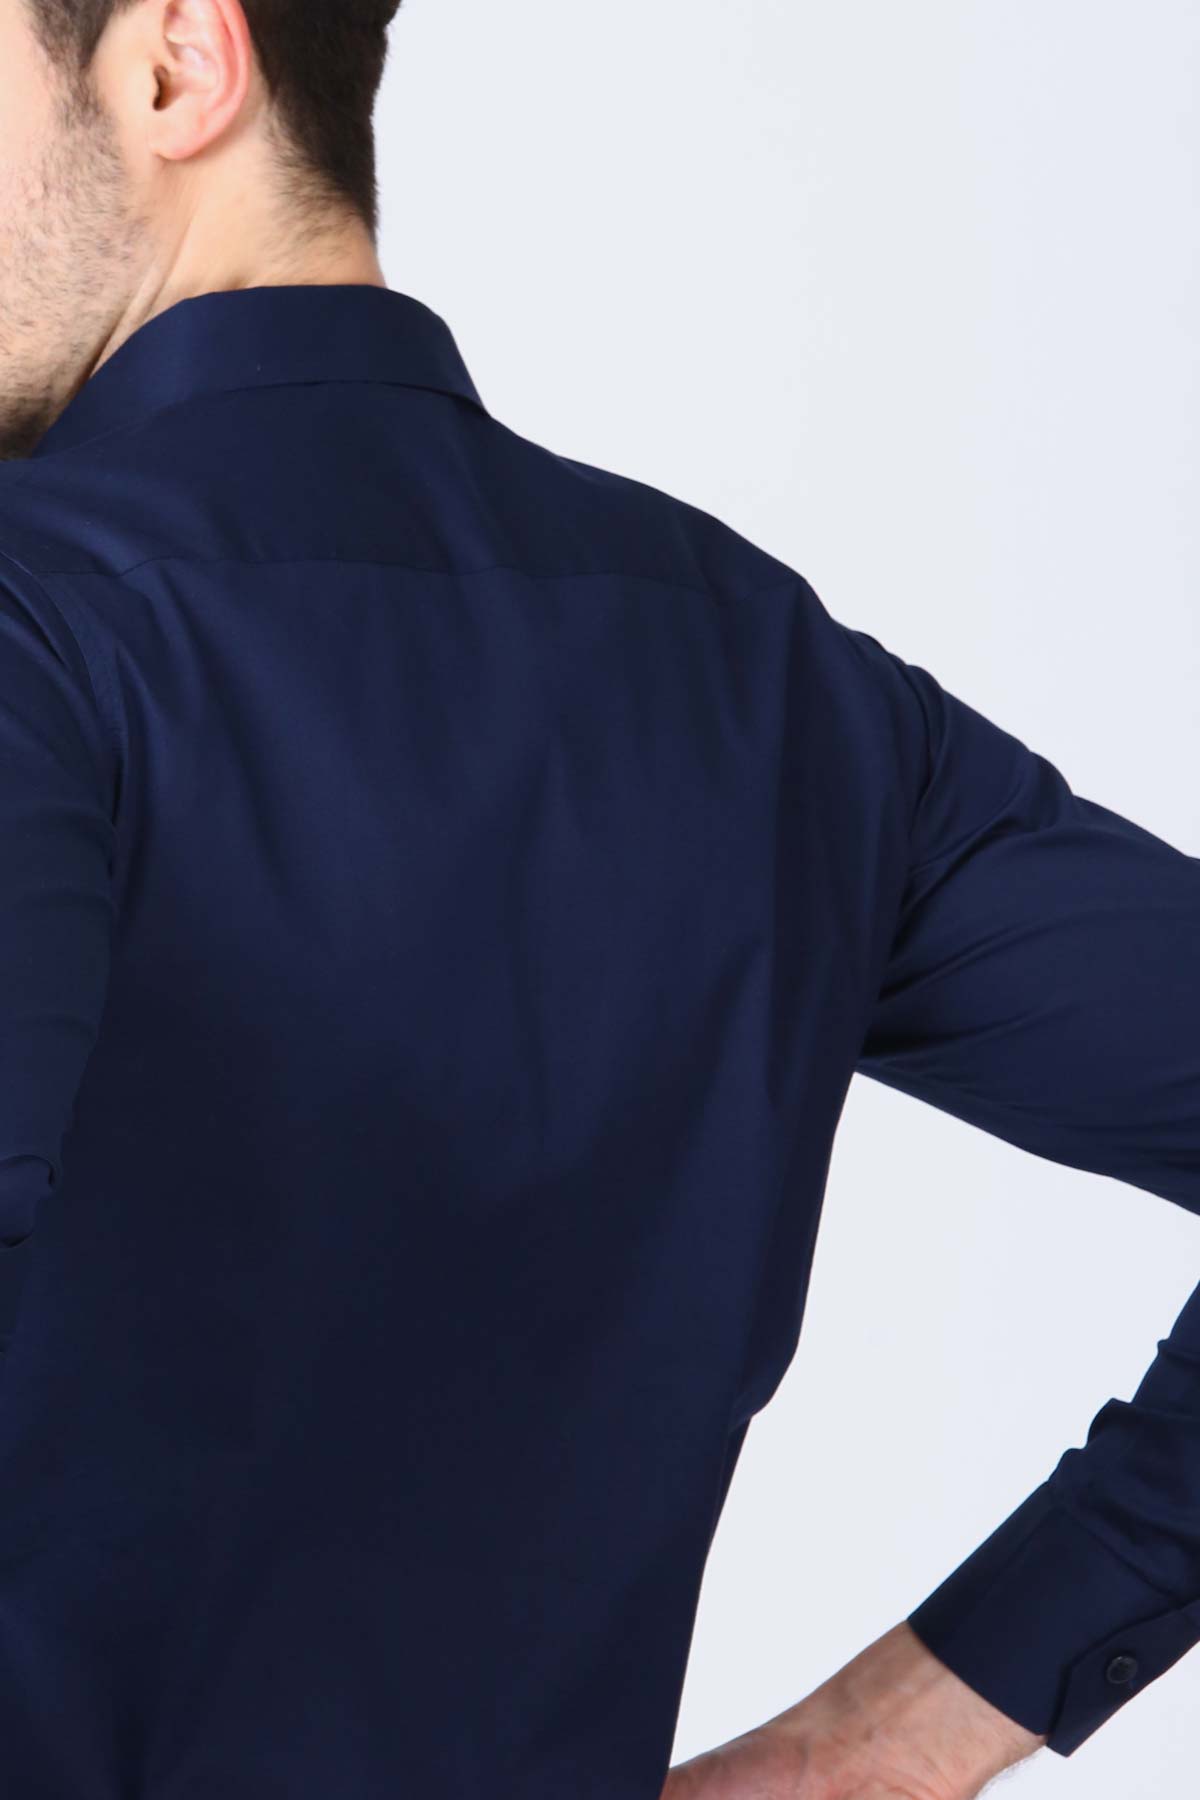 The Navy Blue – Cotton Shirt